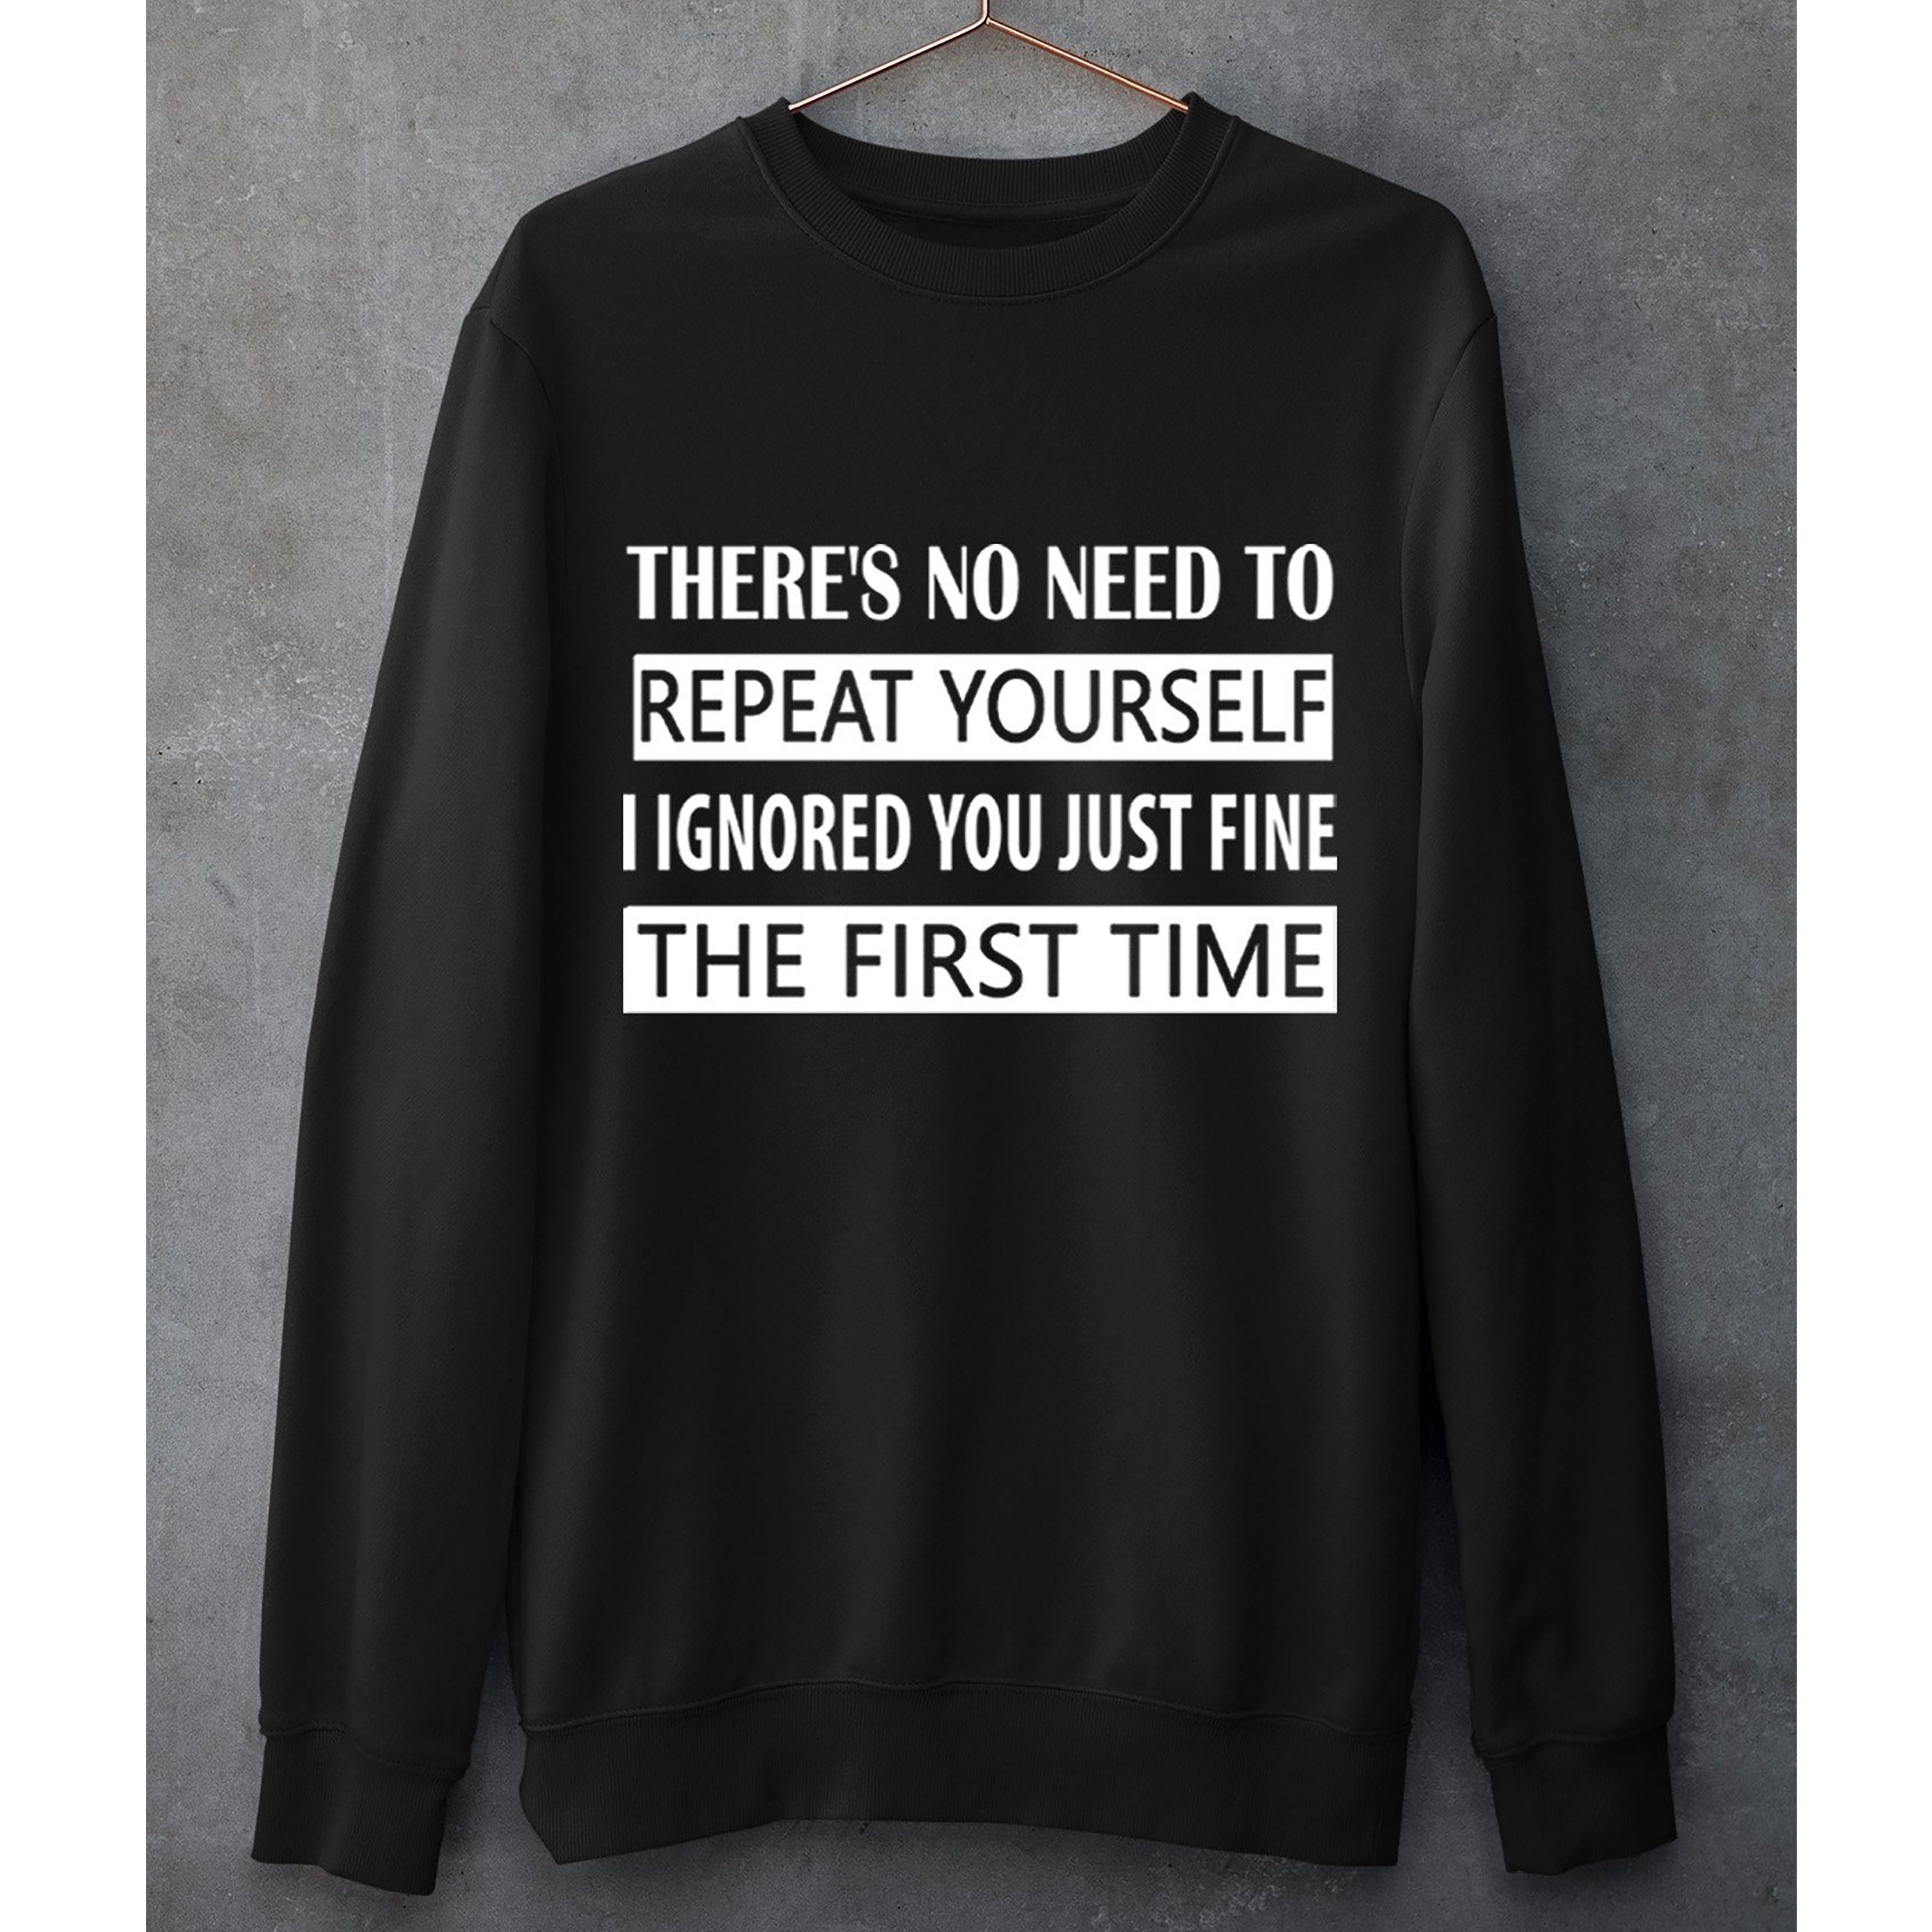 "NO NEED TO REPEAT YOURSELF" - Hoodie & Sweatshirt.